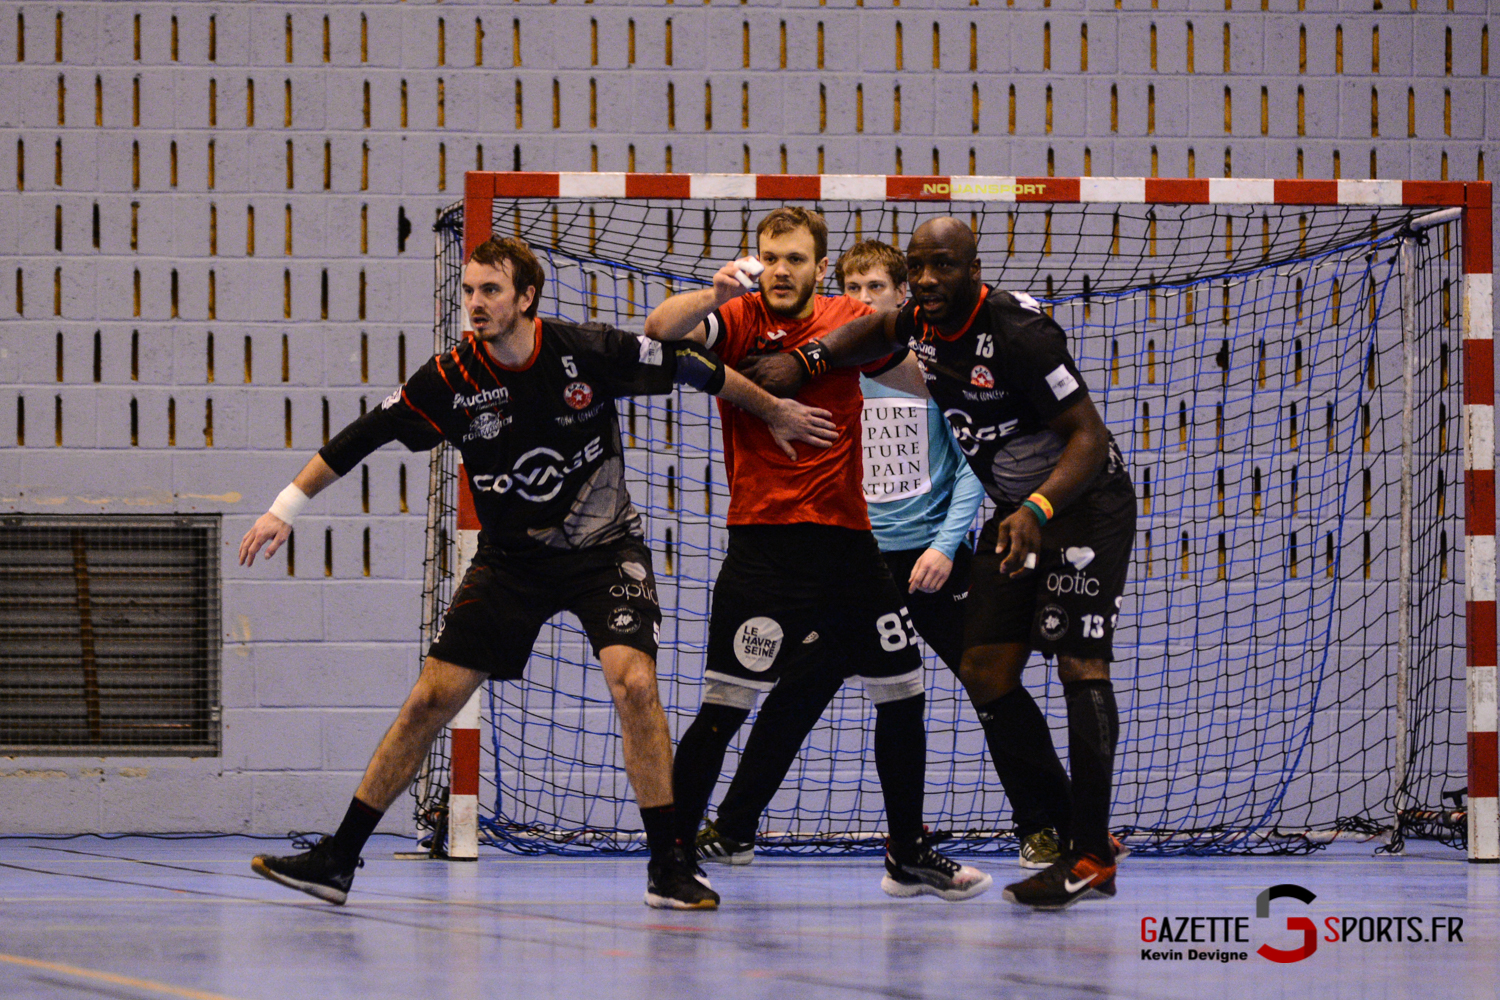 Handball Aph Vs Gonfreville Kevin Devigne 9